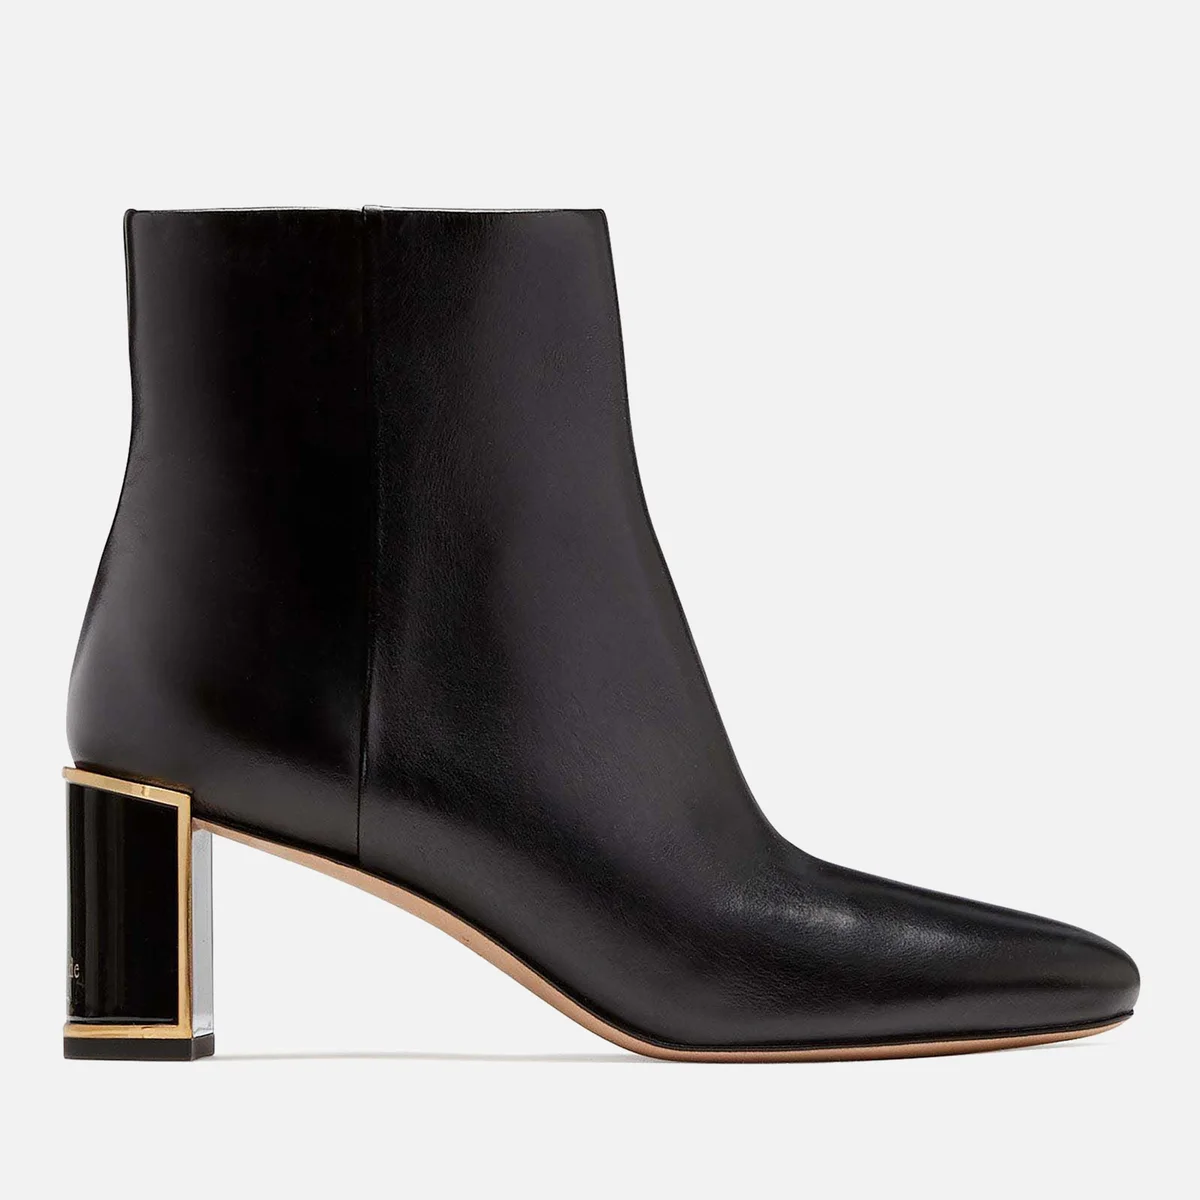 Kate Spade New York Women's Merritt Leather Heeled Boots Image 1